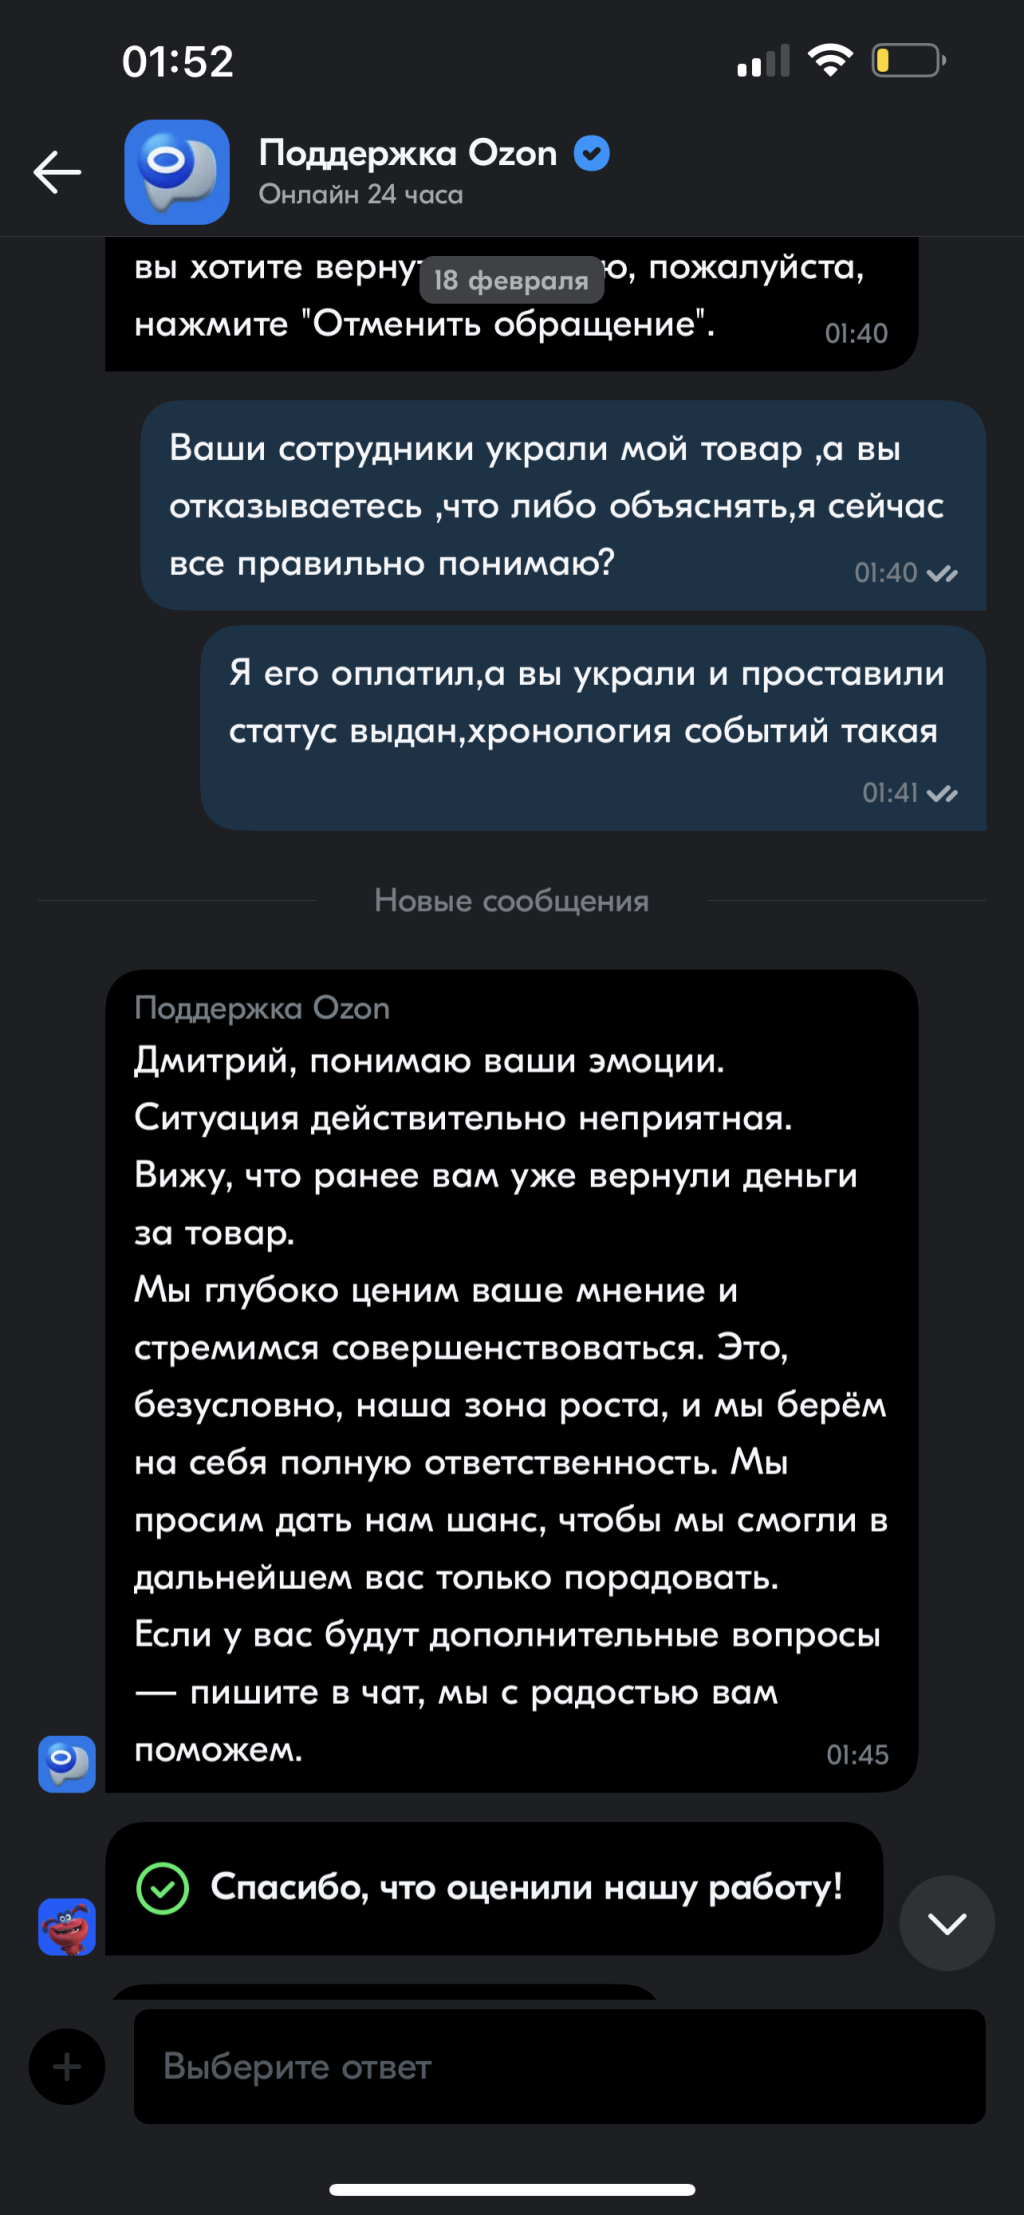 OZON.ru - Украли товар